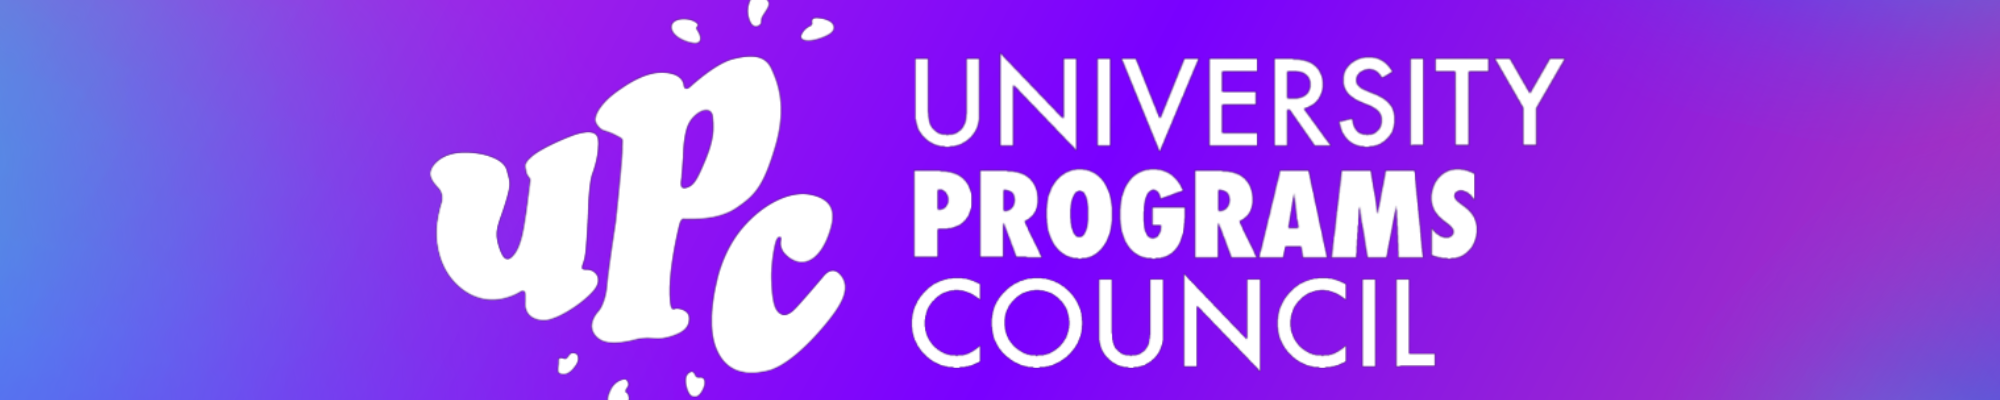 University Programs Council